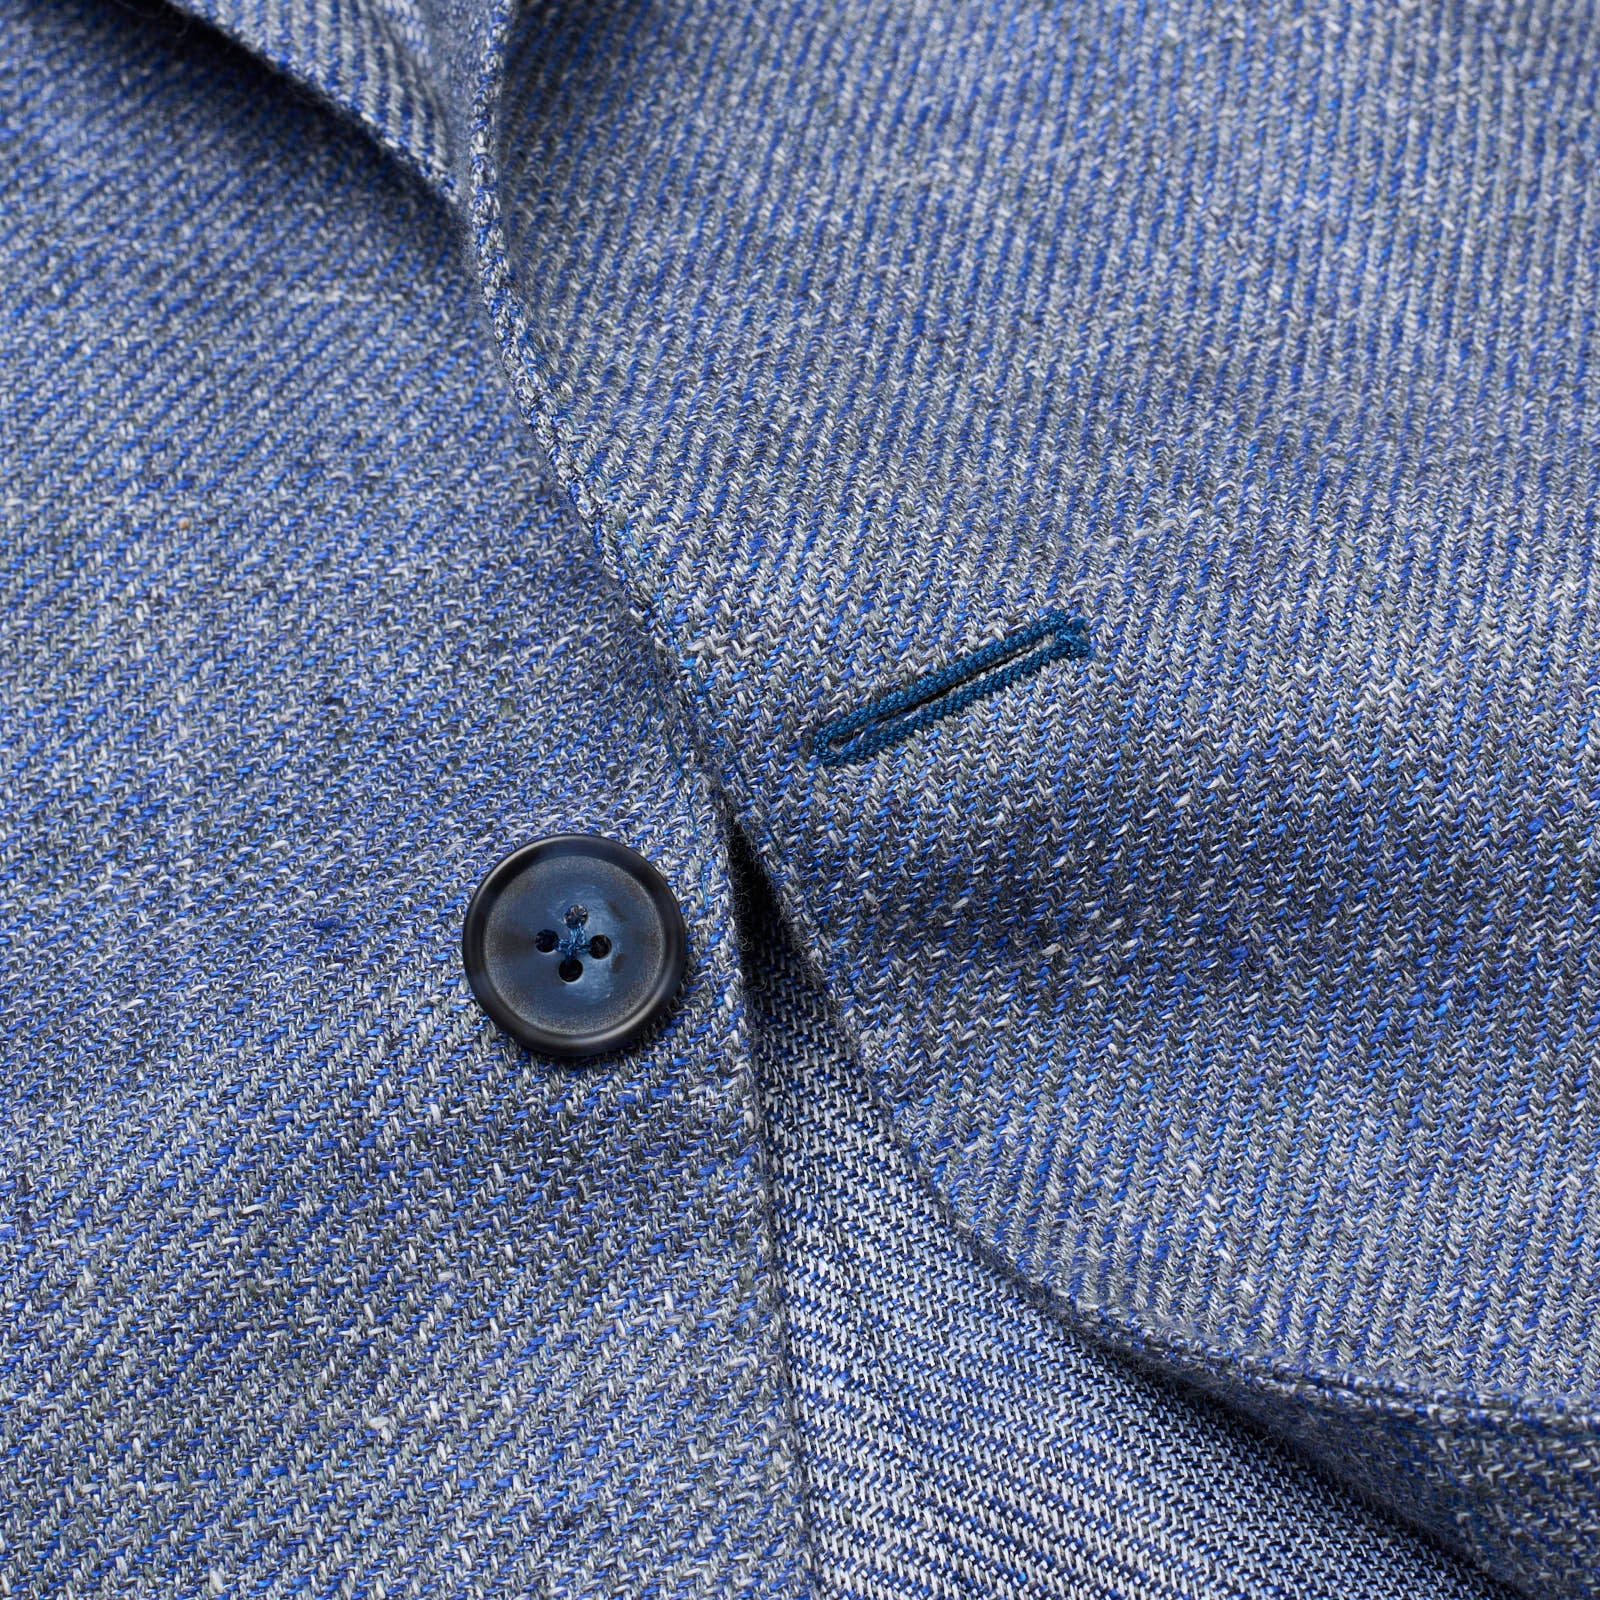 SARTORIA PARTENOPEA Blue Linen-Cotton Unlined Jacket NEW  Current Model